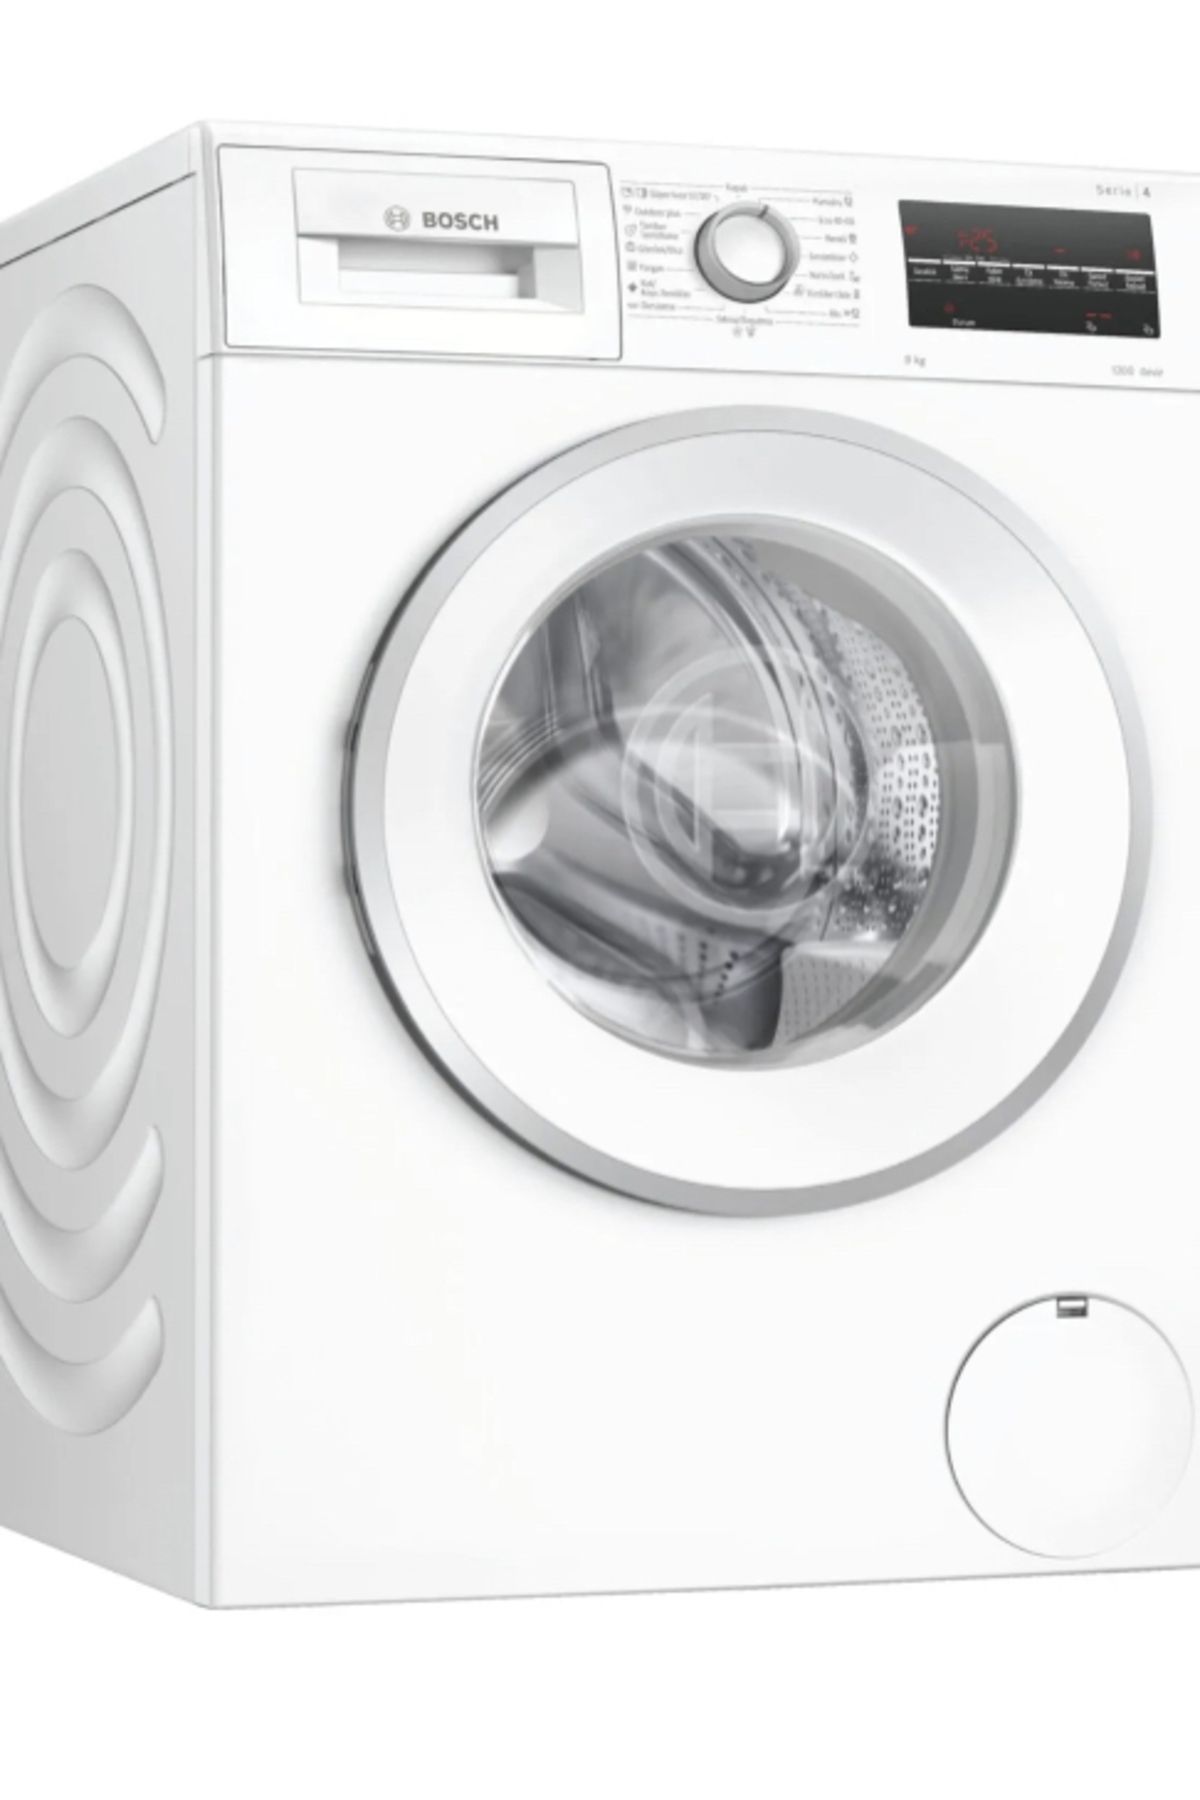 Bosch Çamaşır makinesi